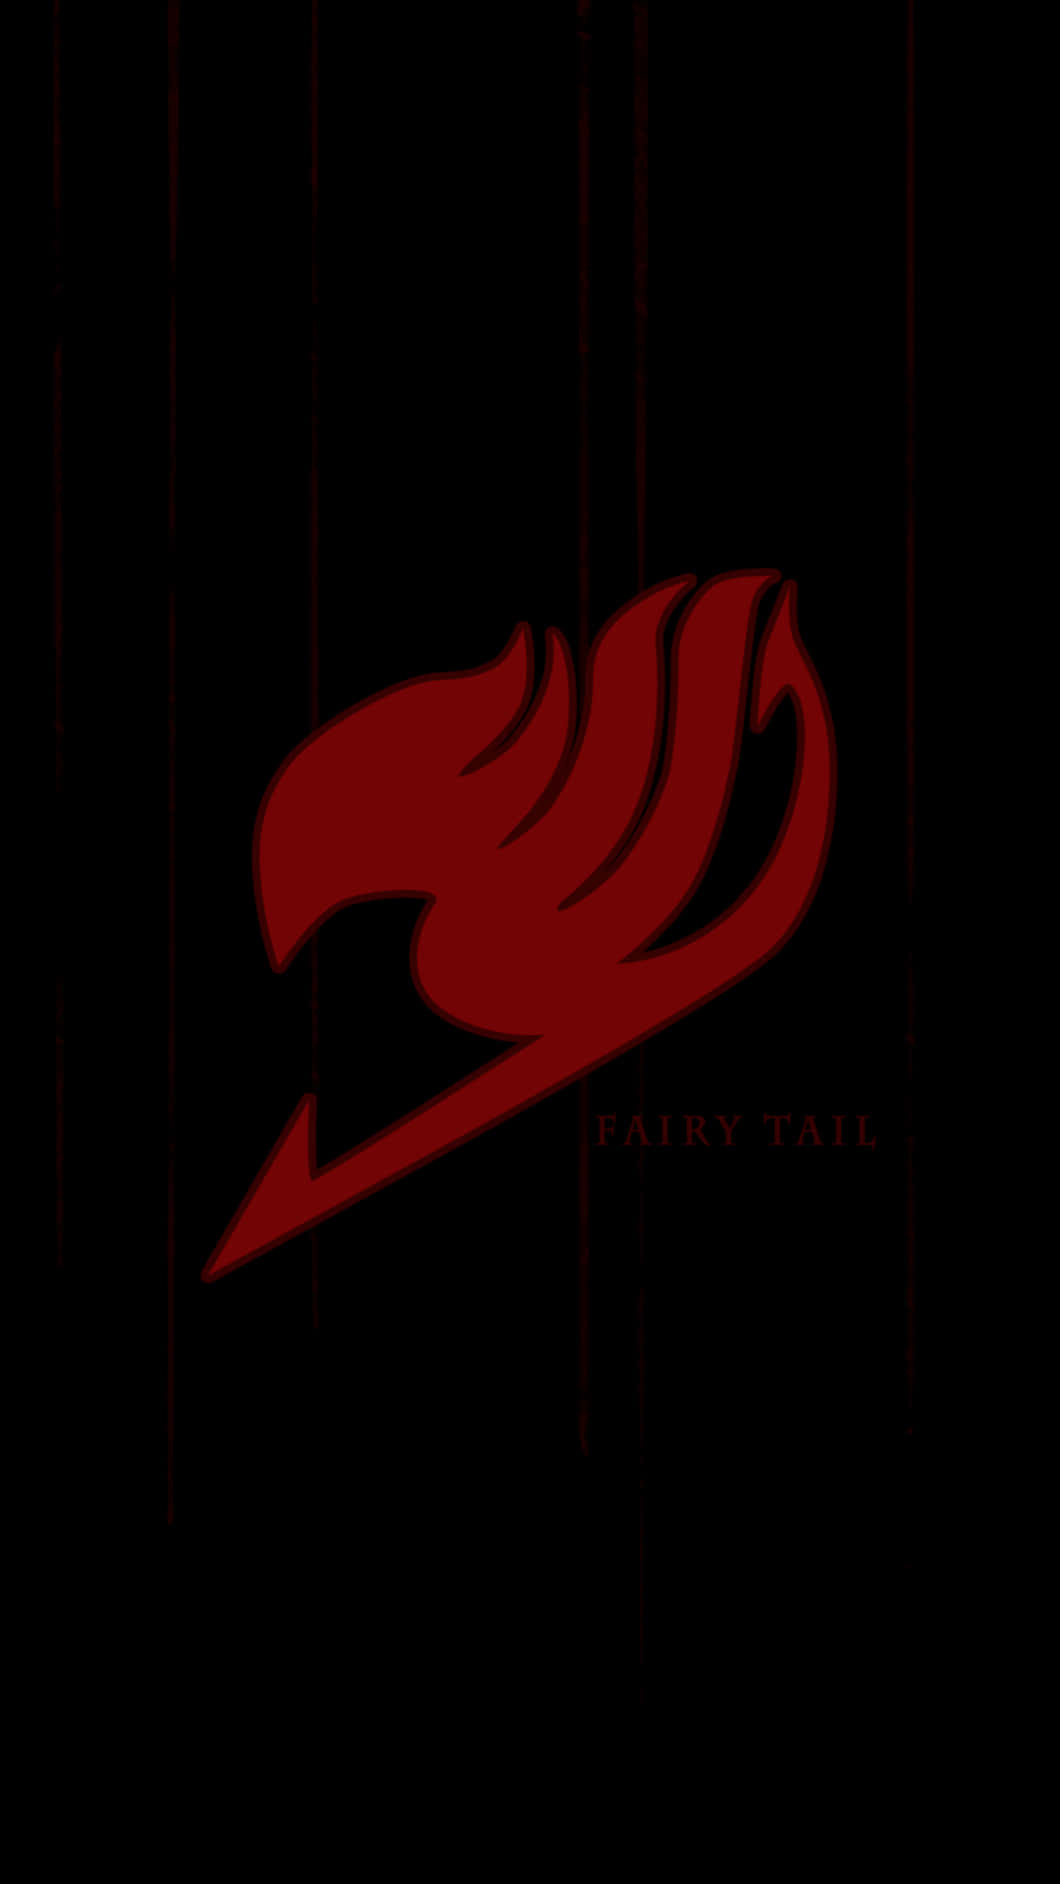 Fairytail Logo Nero Impostazione Iphone Sfondo